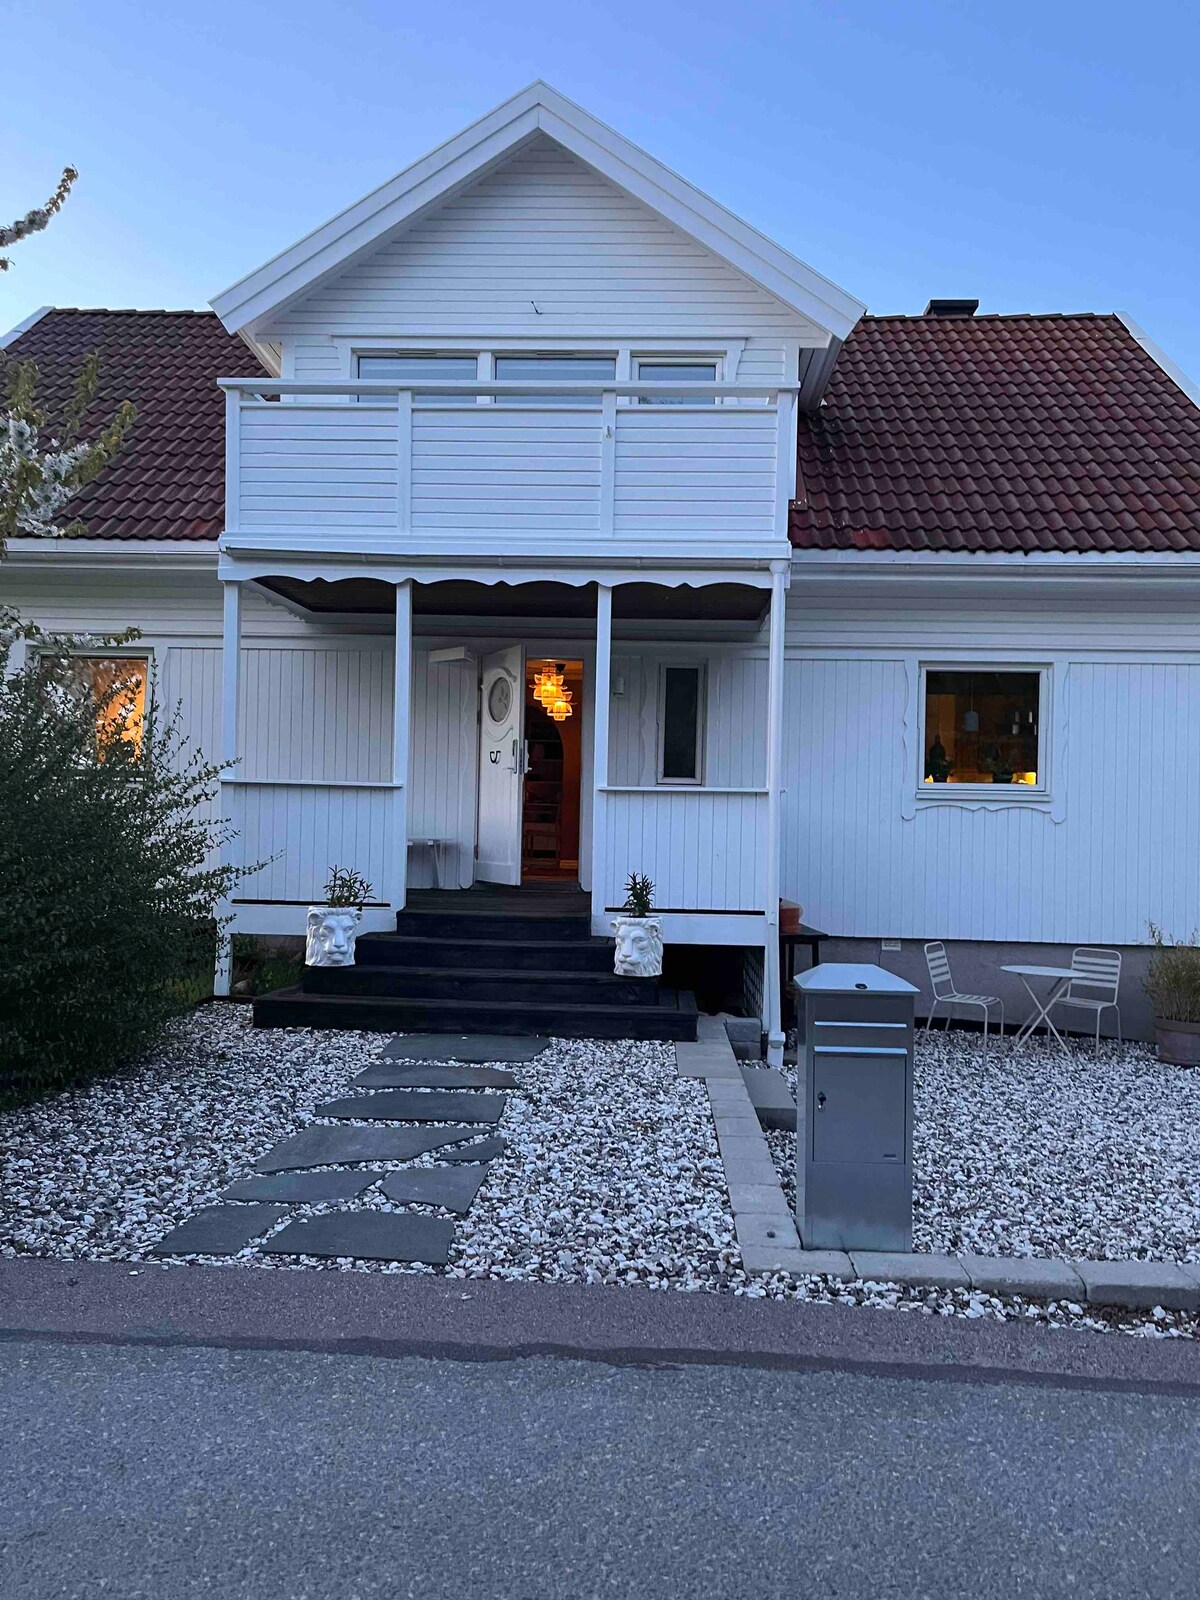 Styrsö哥德堡南群岛的迷人宅